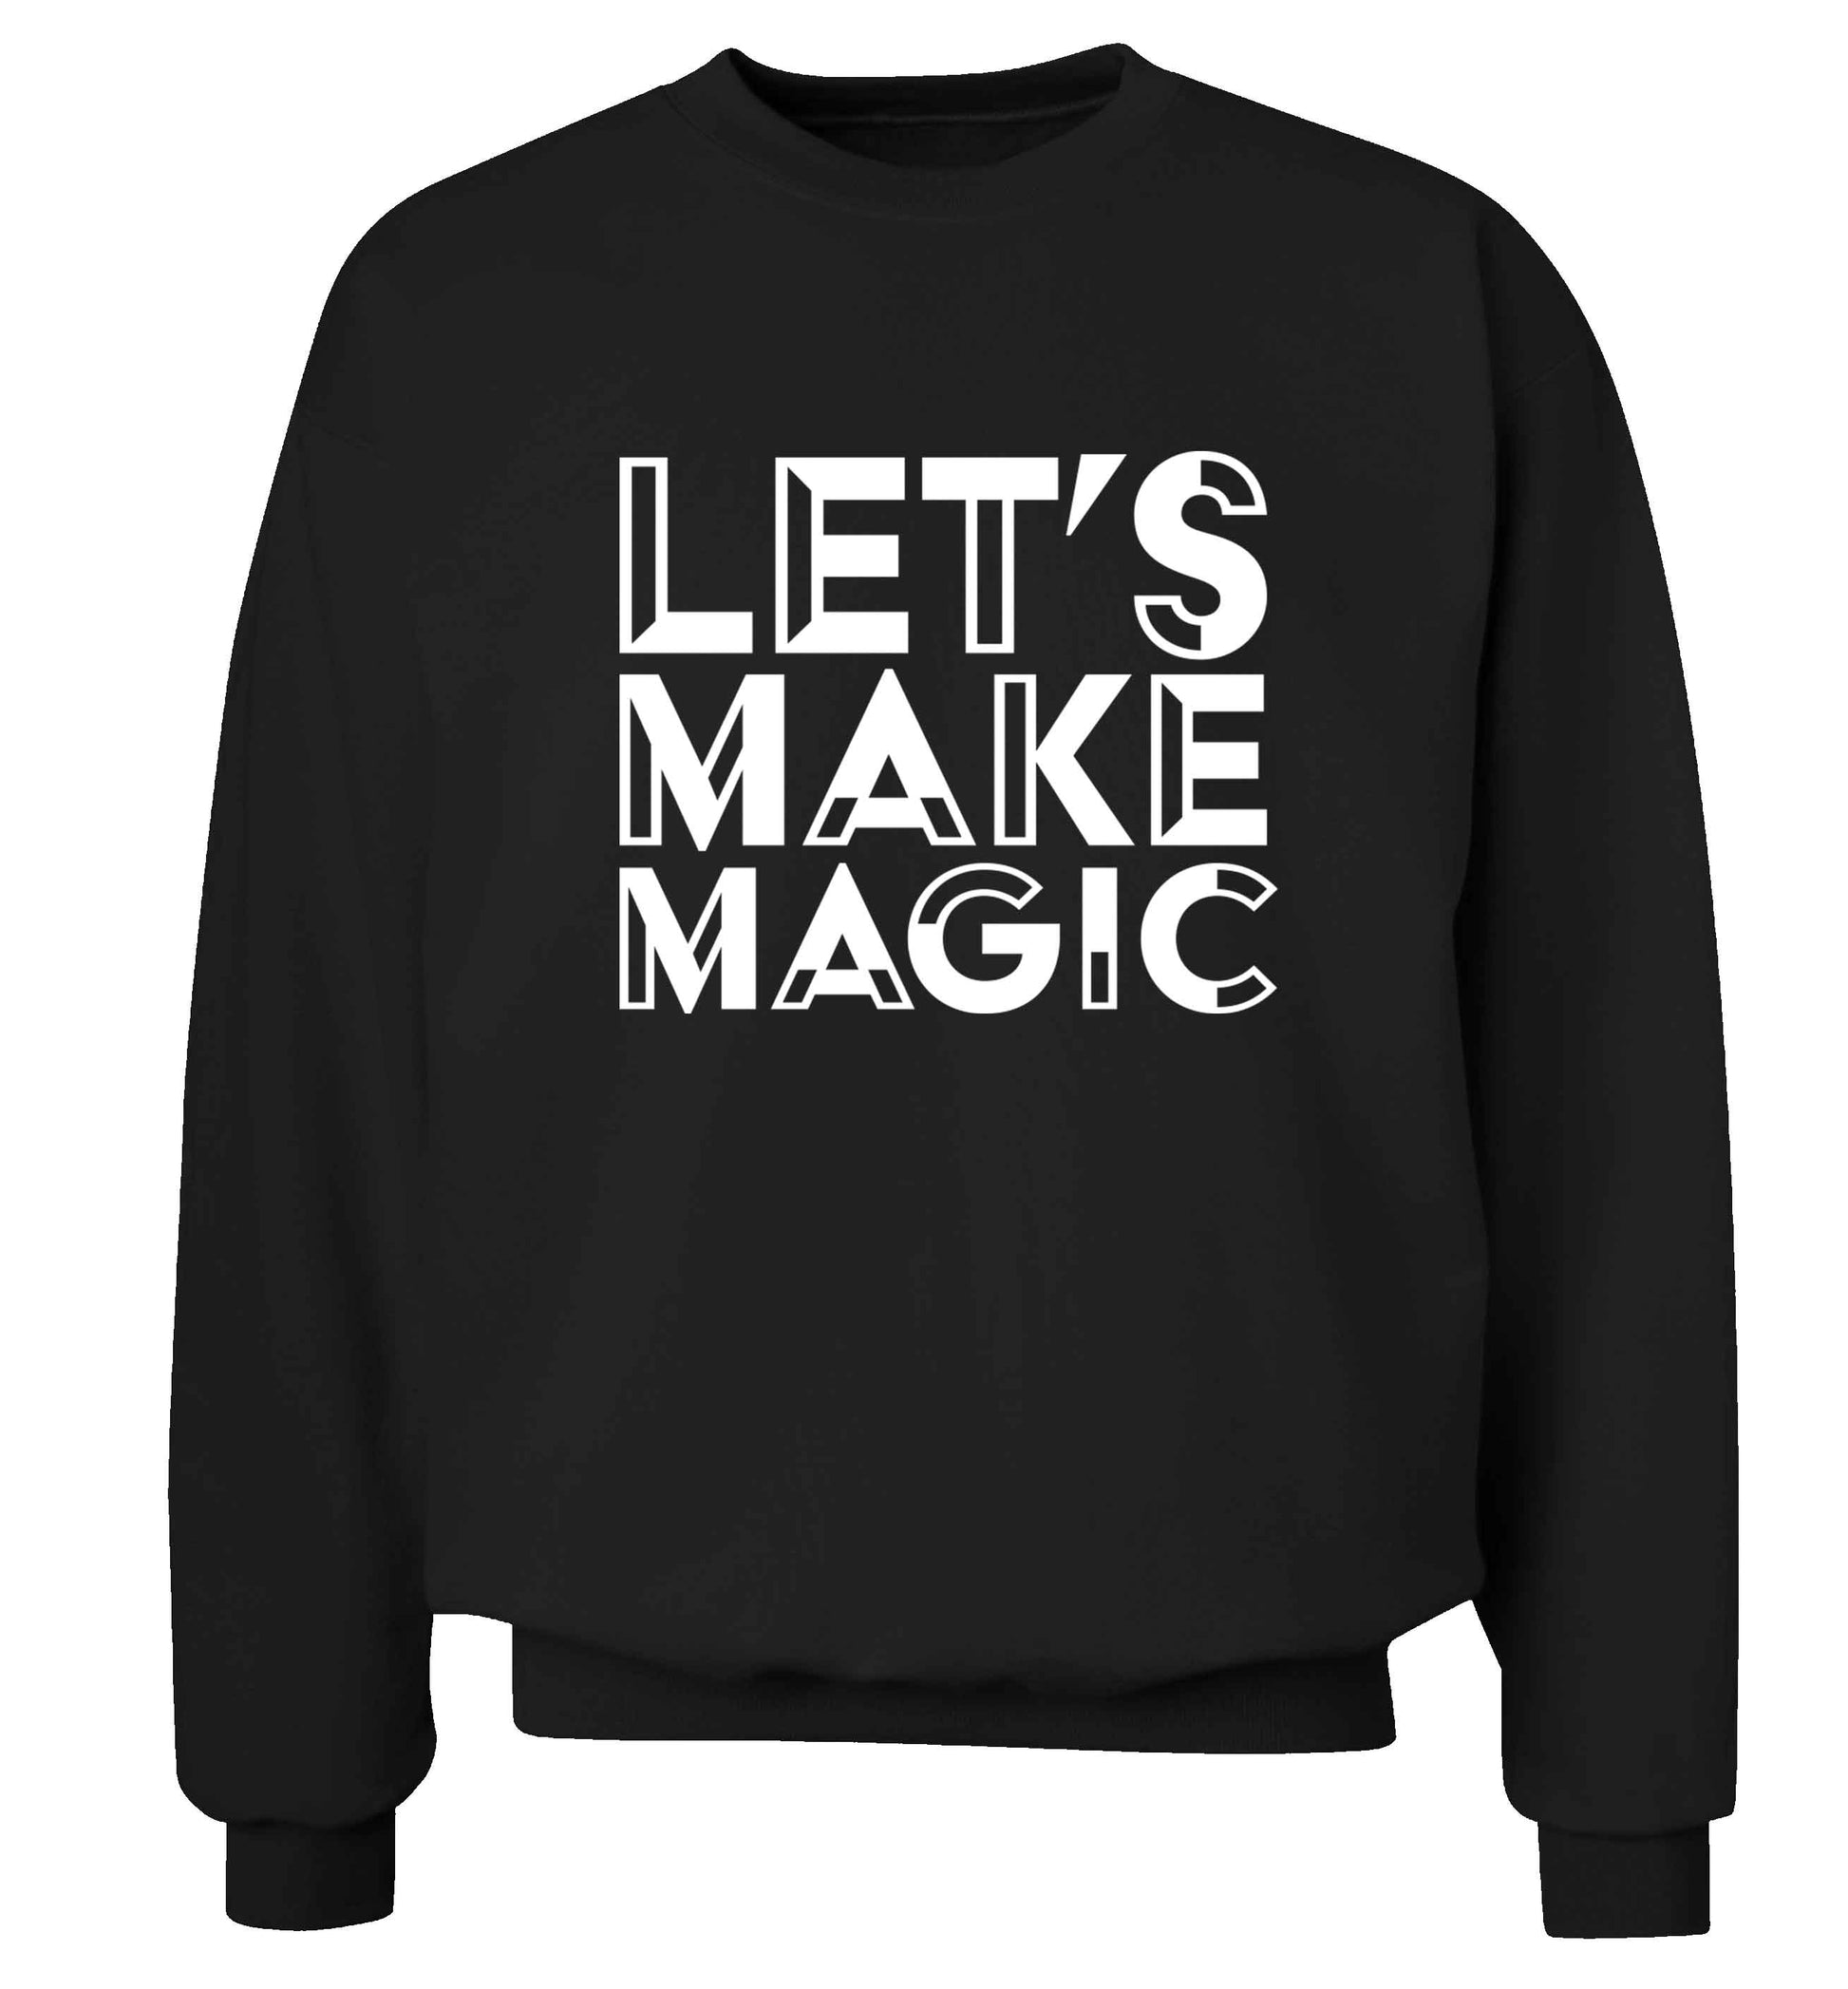 Let's make magic adult's unisex black sweater 2XL